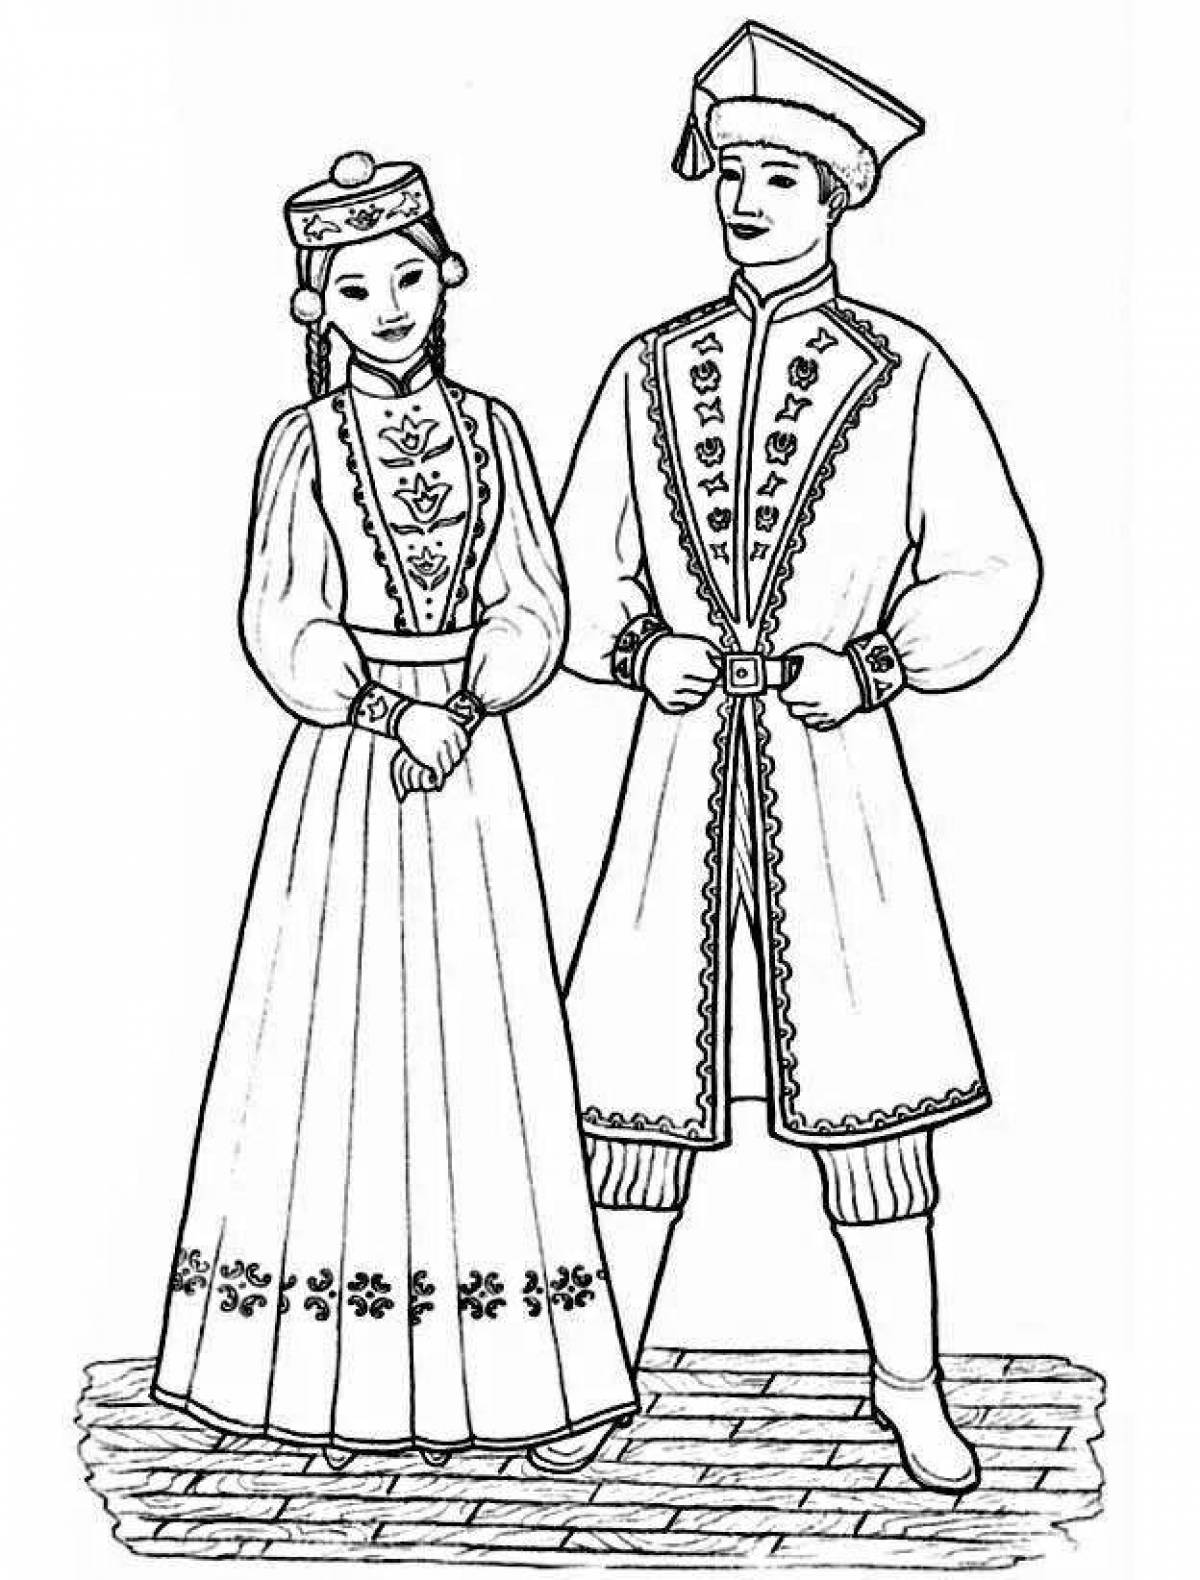 Coloring page festive Russian folk costume